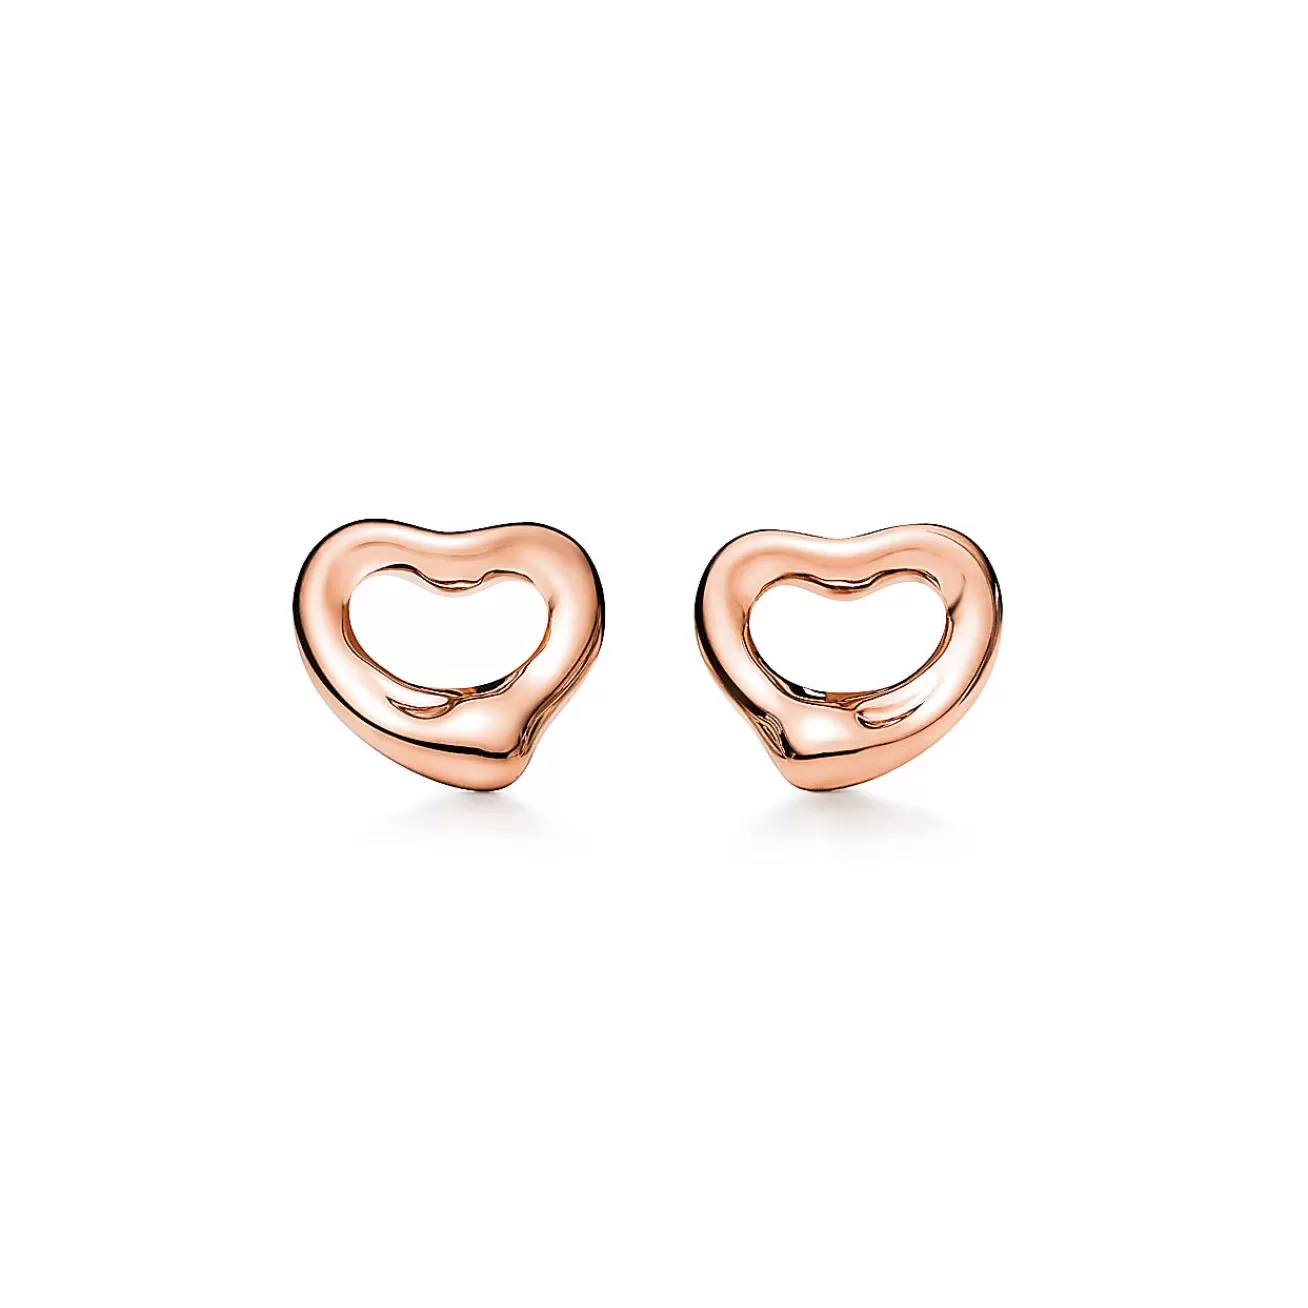 Tiffany & Co. Elsa Peretti® Open Heart earrings in 18k rose gold. More sizes available. | ^ Earrings | Rose Gold Jewelry